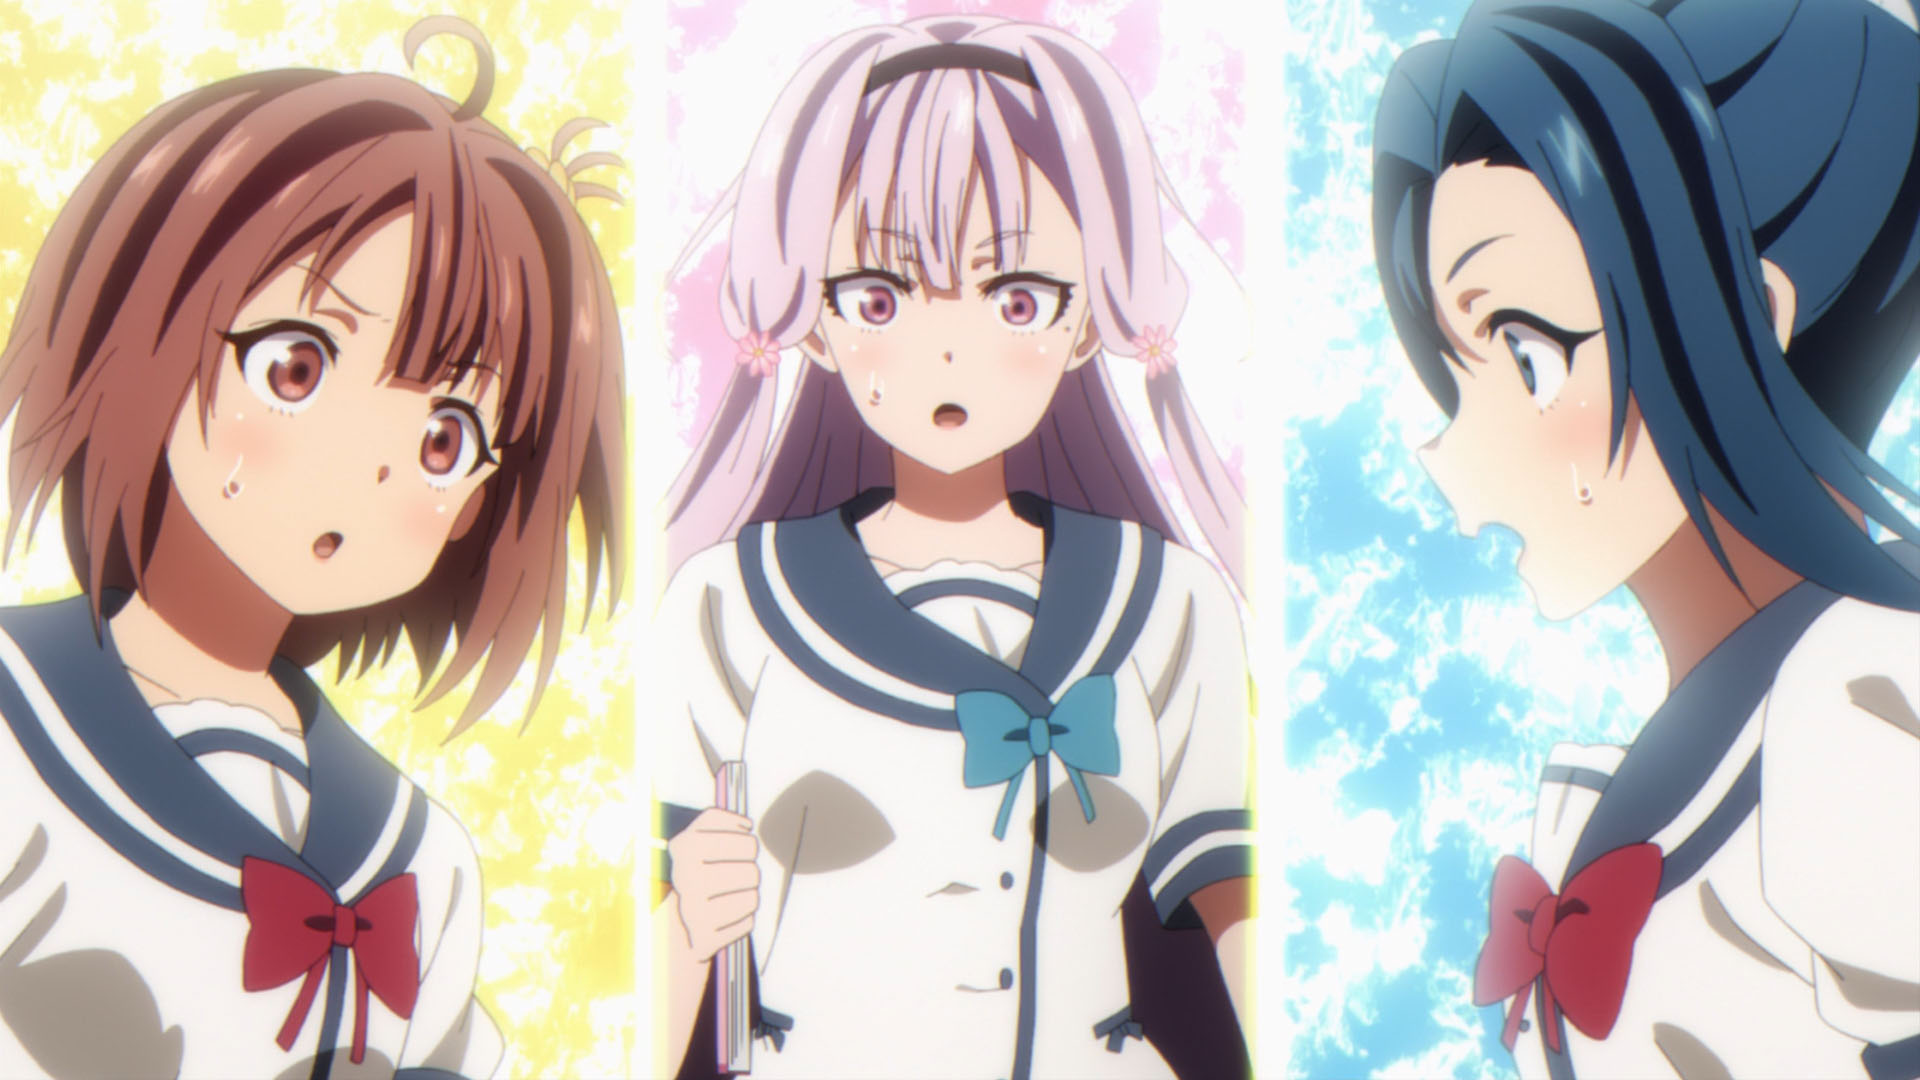 10 Ore wo sukinanoha ideas  anime, anime girl, anime characters